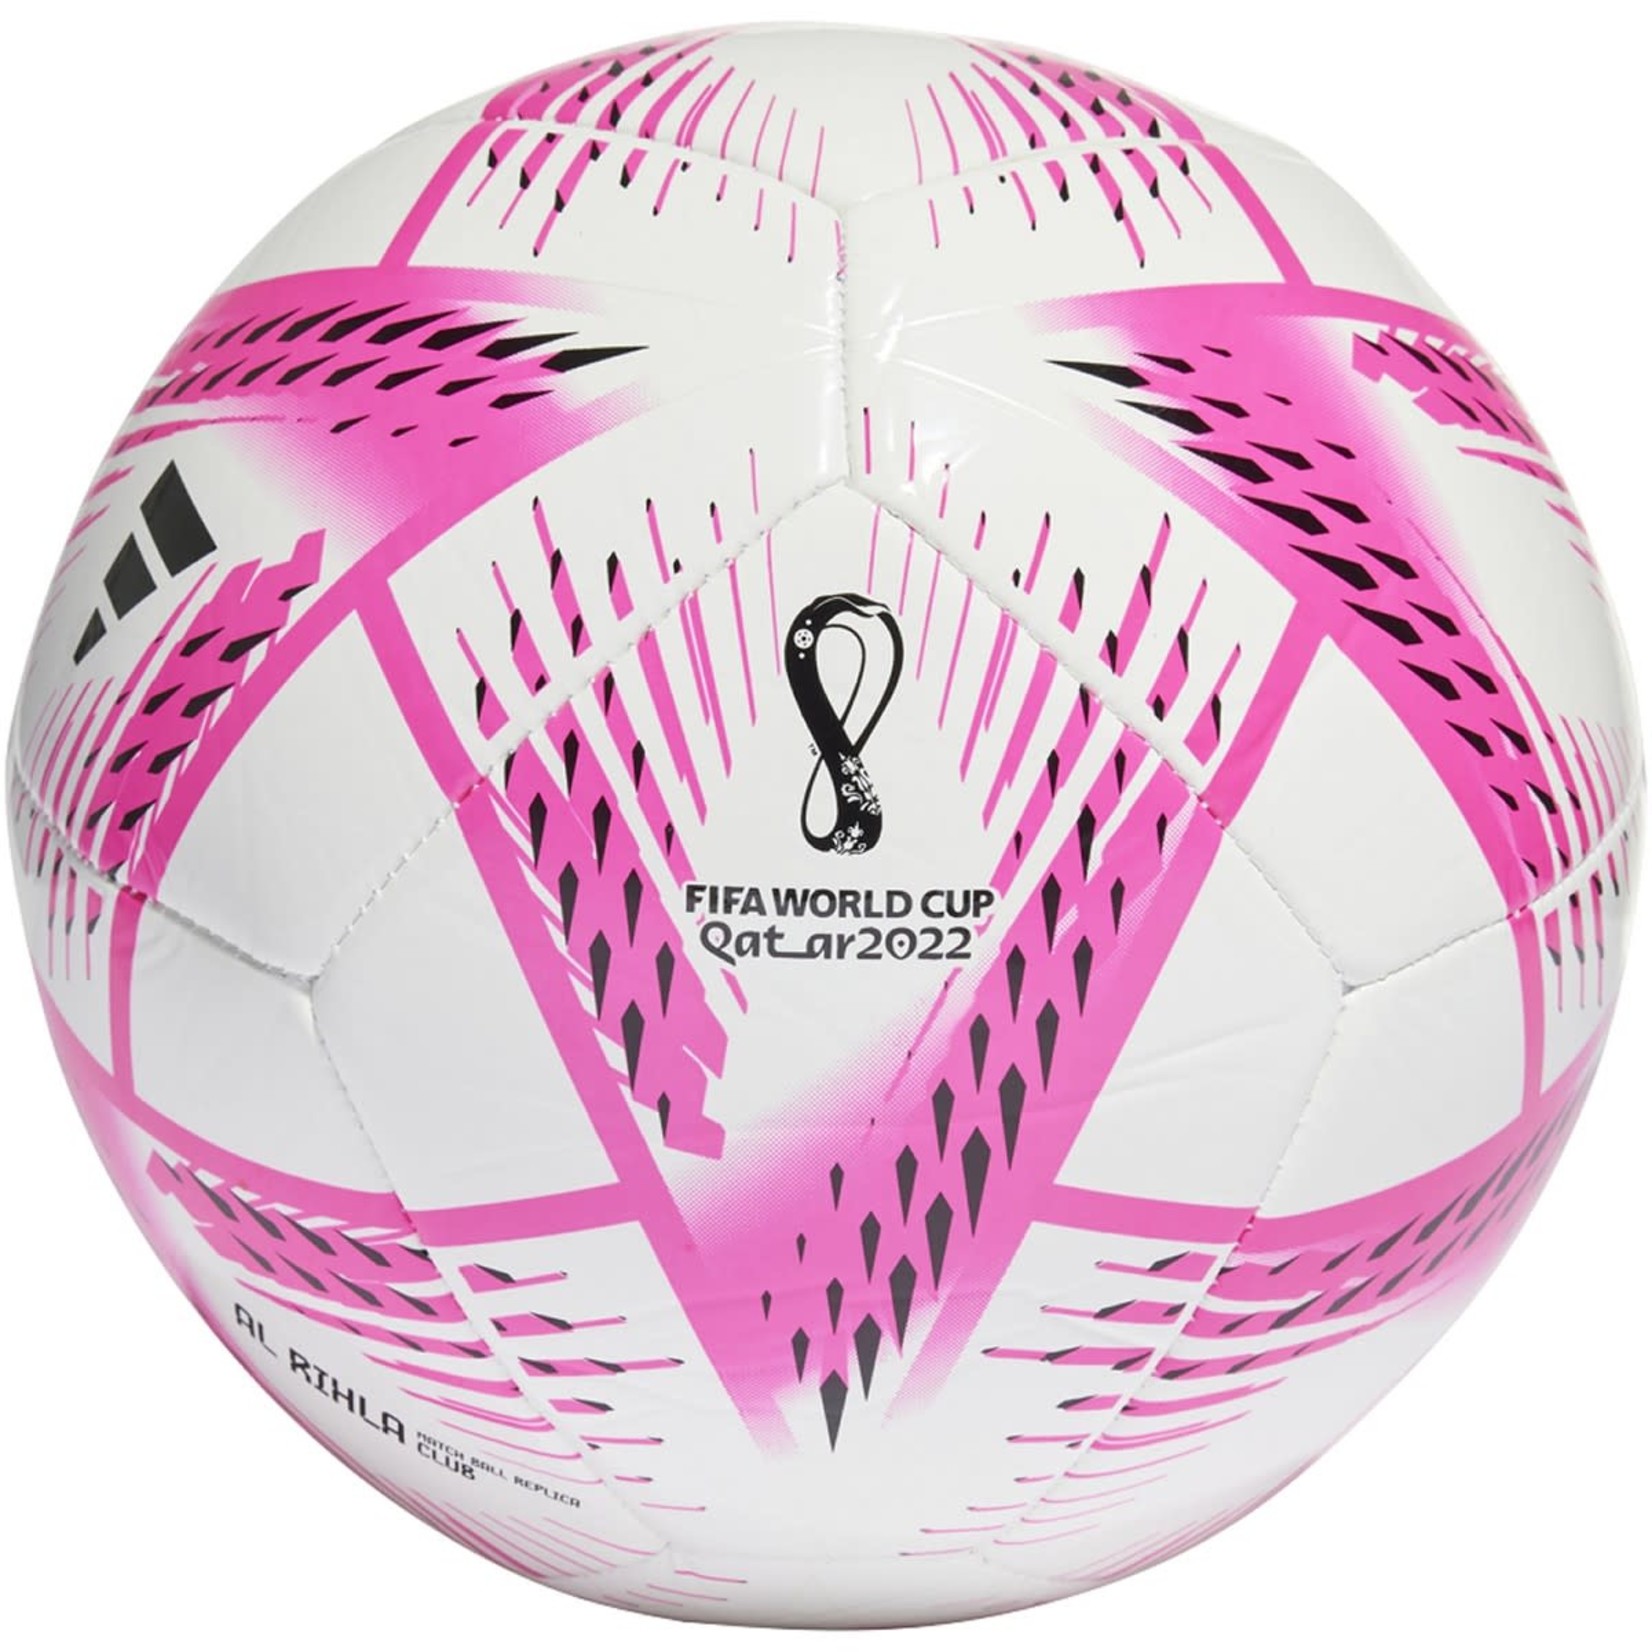 2022 fifa world cup soccer ball